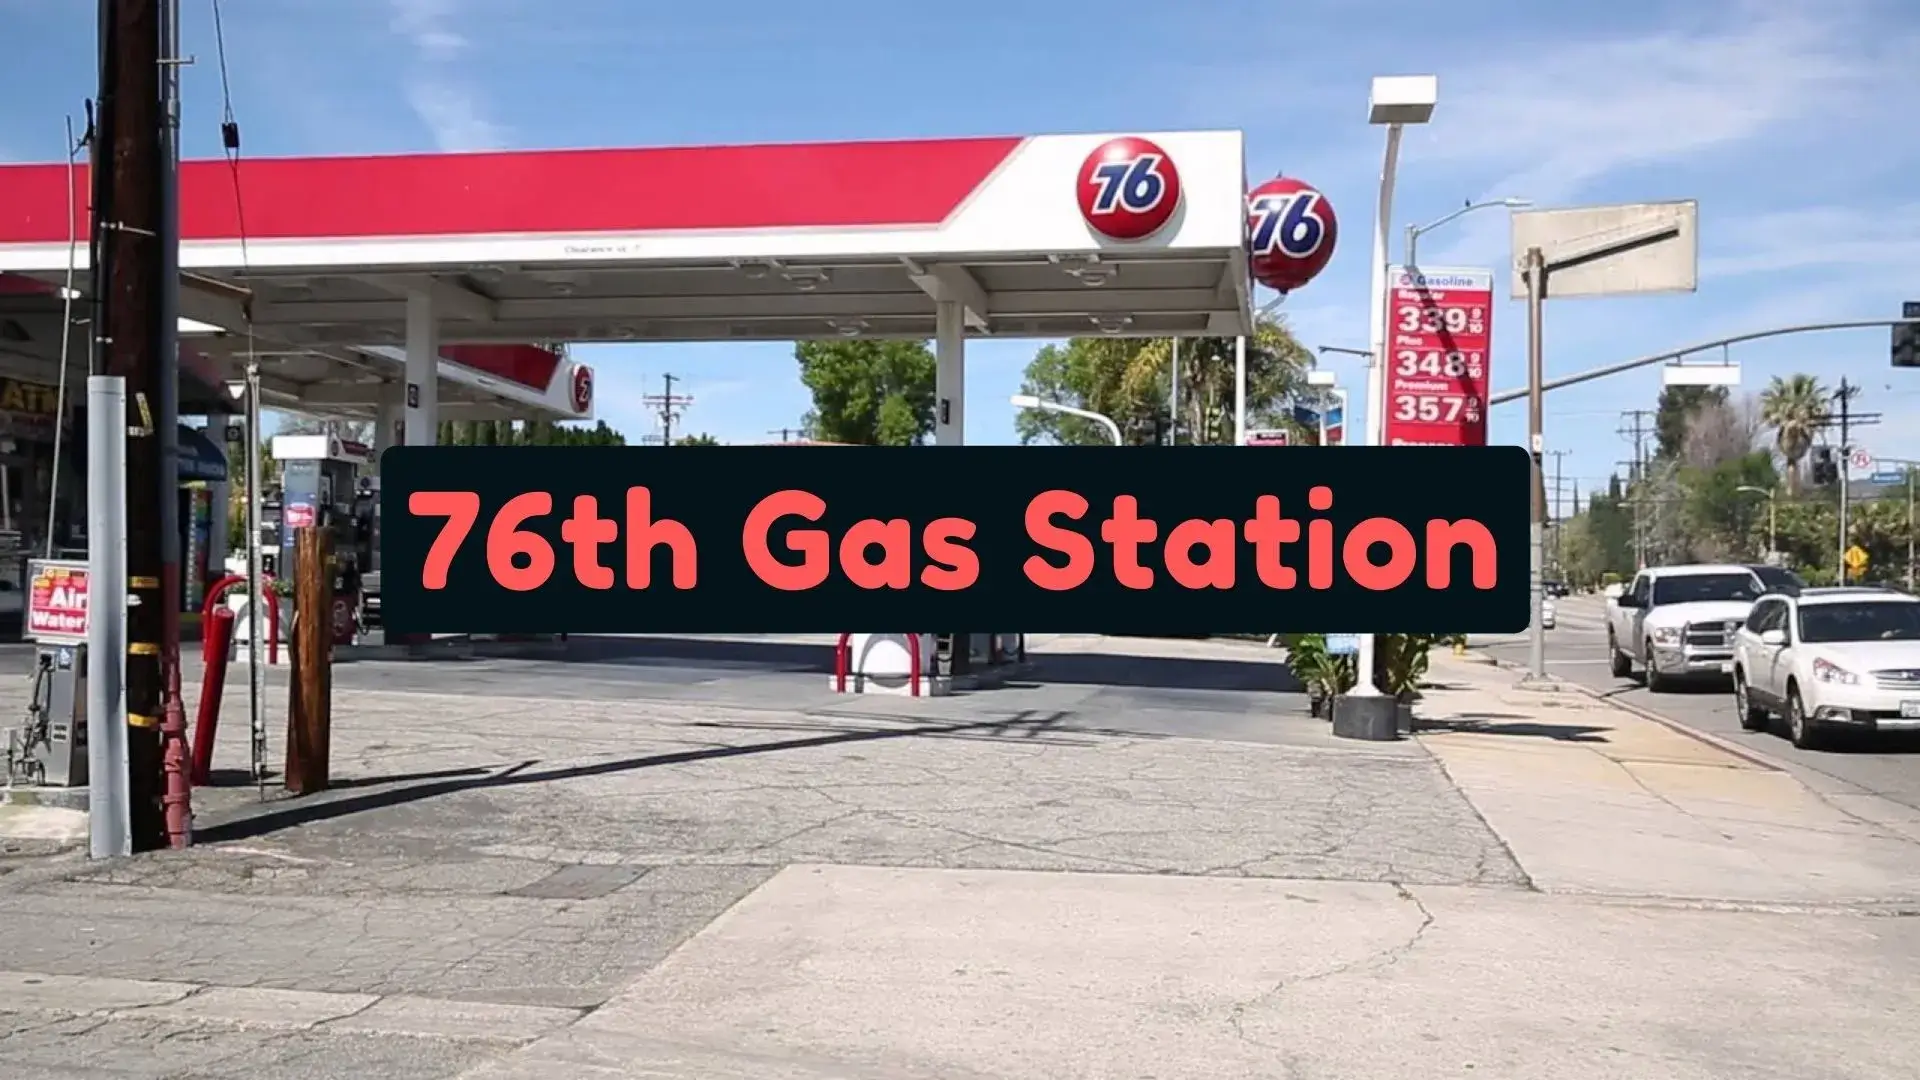 76th Gas Station Near Me